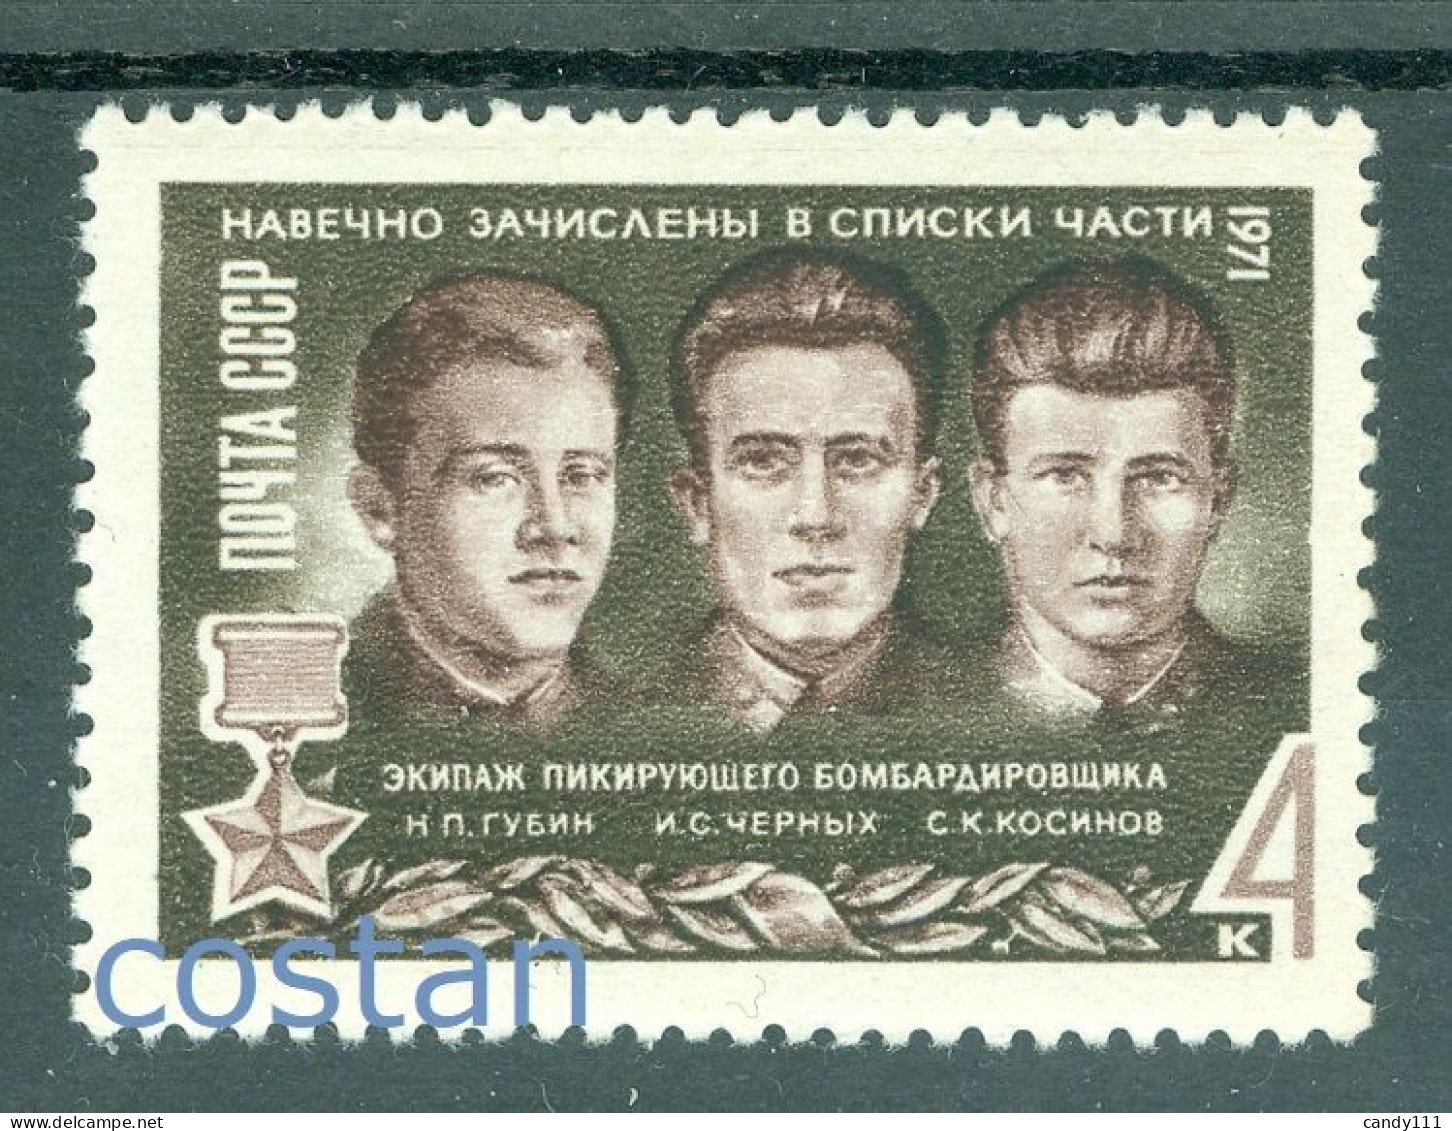 1971 War Medal,War Heroes Of Soviet Union,Pilot N.Gubin,Kosinov,Russia,3849,MNH - Militares